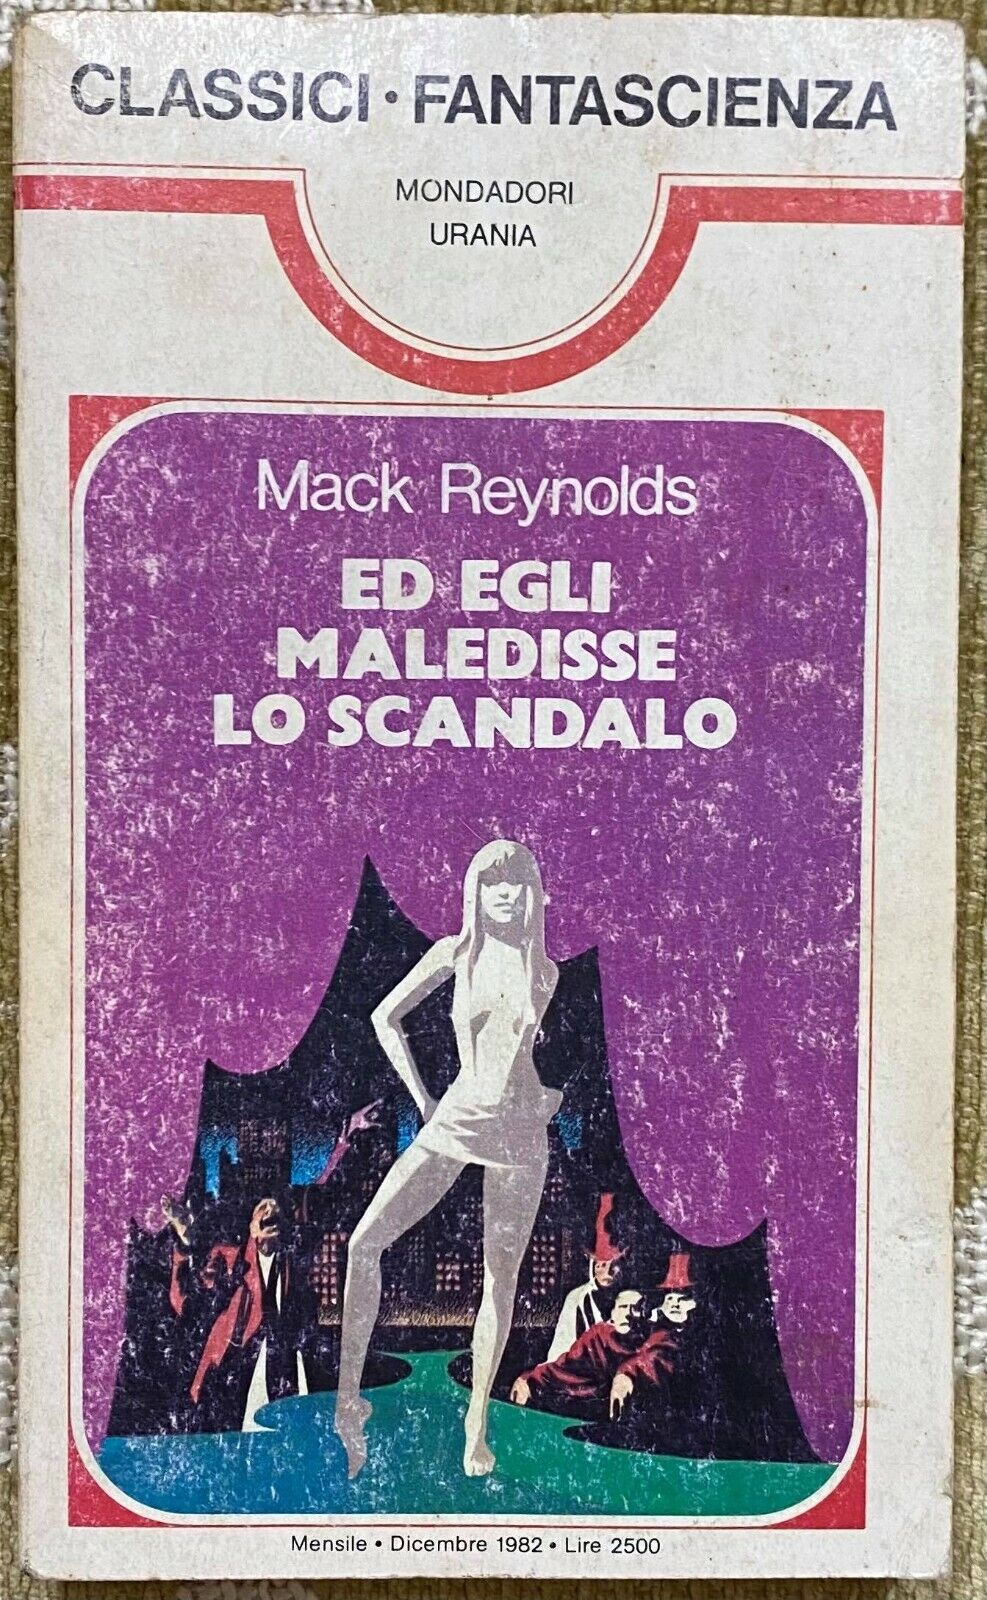 Ed egli maledisse lo scandalo - Mack Reynolds - Mondadori - 1982 - M